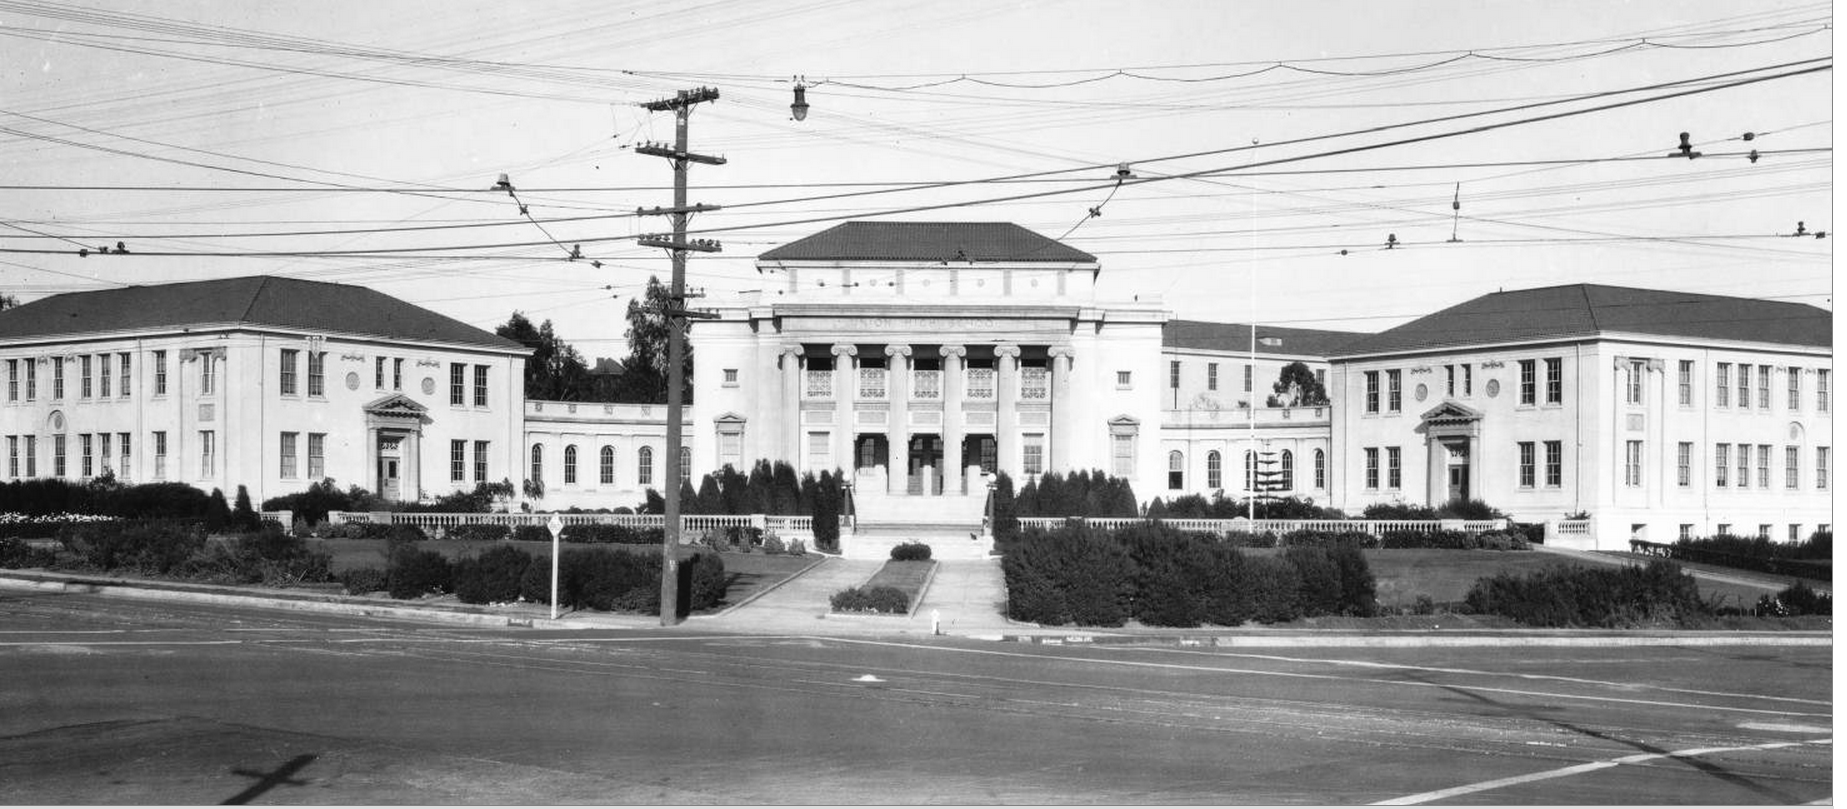 Photograph of an exterior view of the Redondo Union High School, Redondo Beach, ca.1925. 